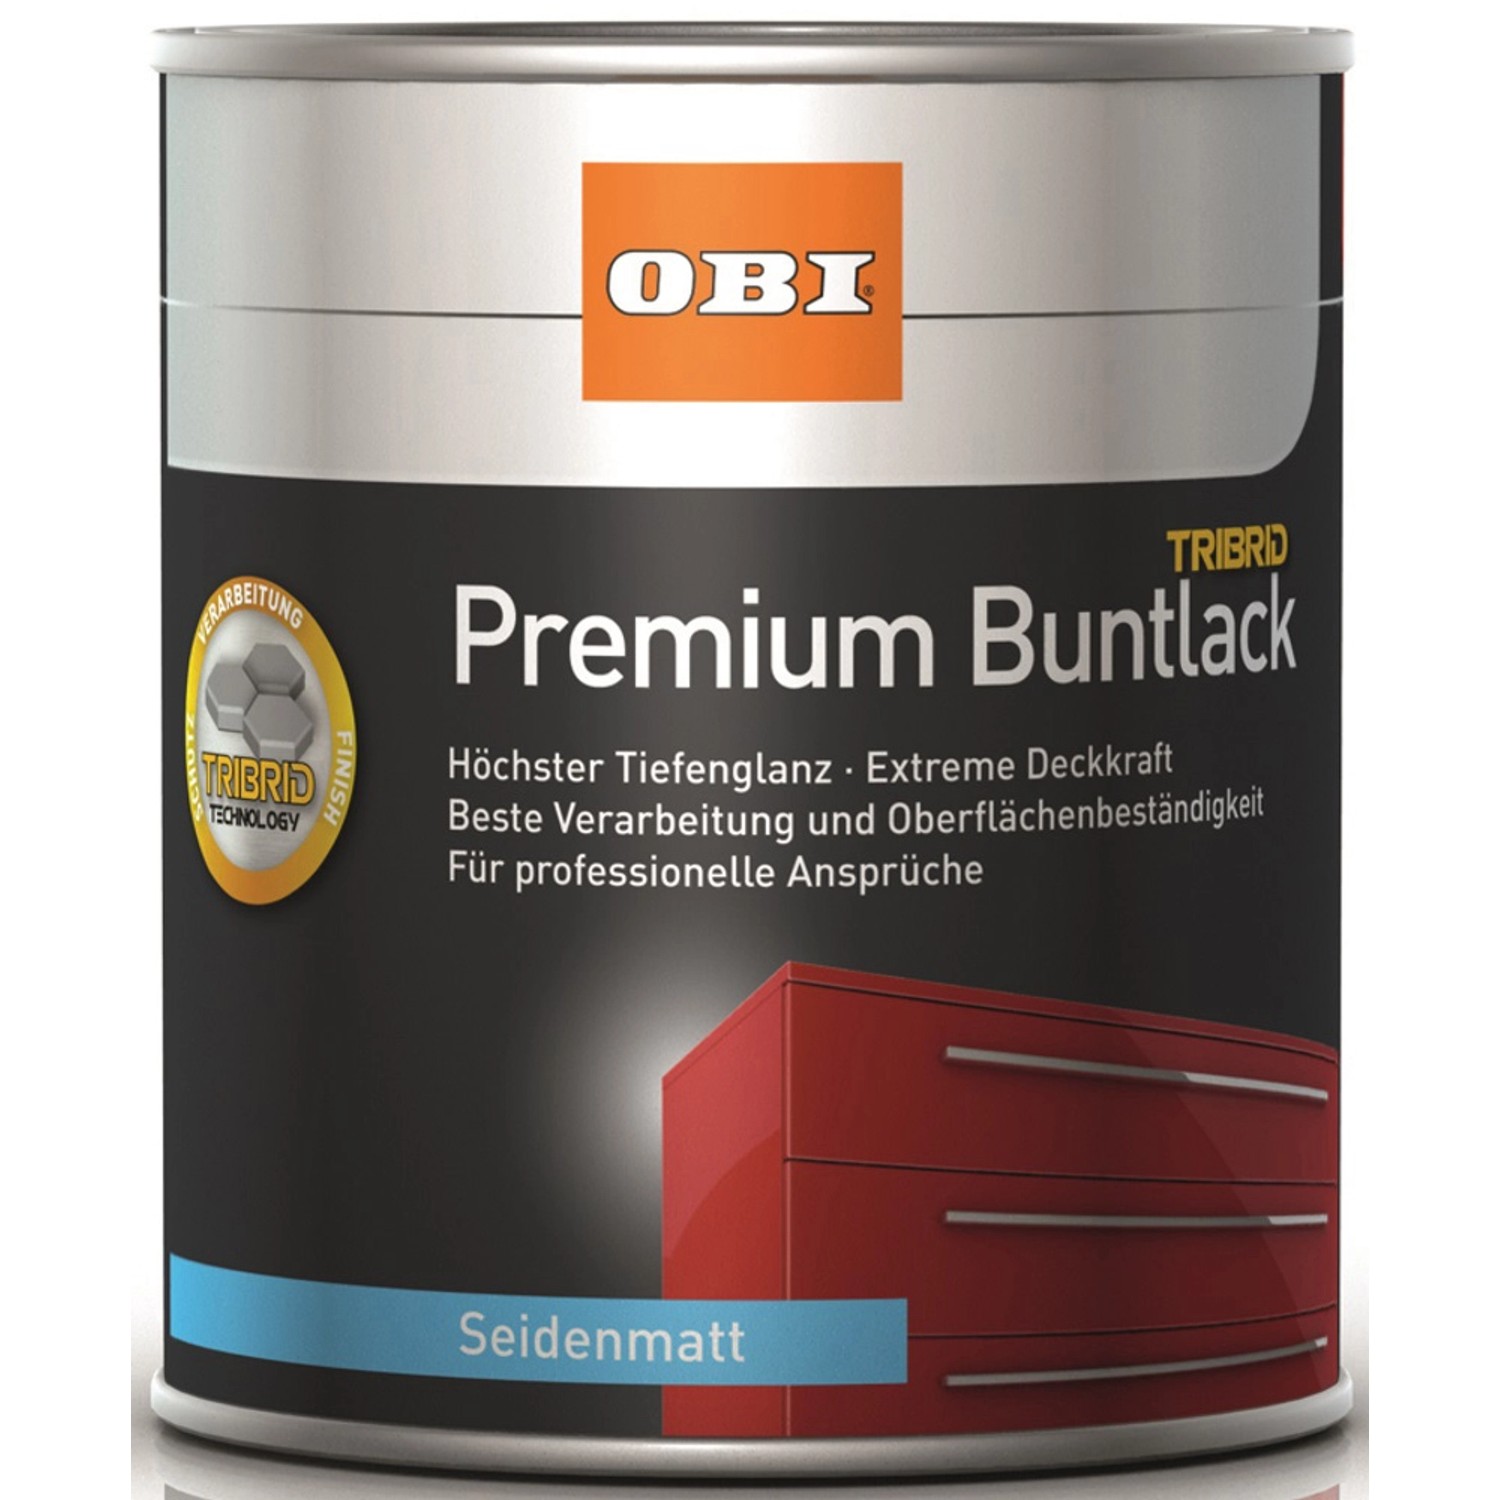 OBI Premium Buntlack Tribrid Tiefschwarz seidenmatt 750 ml